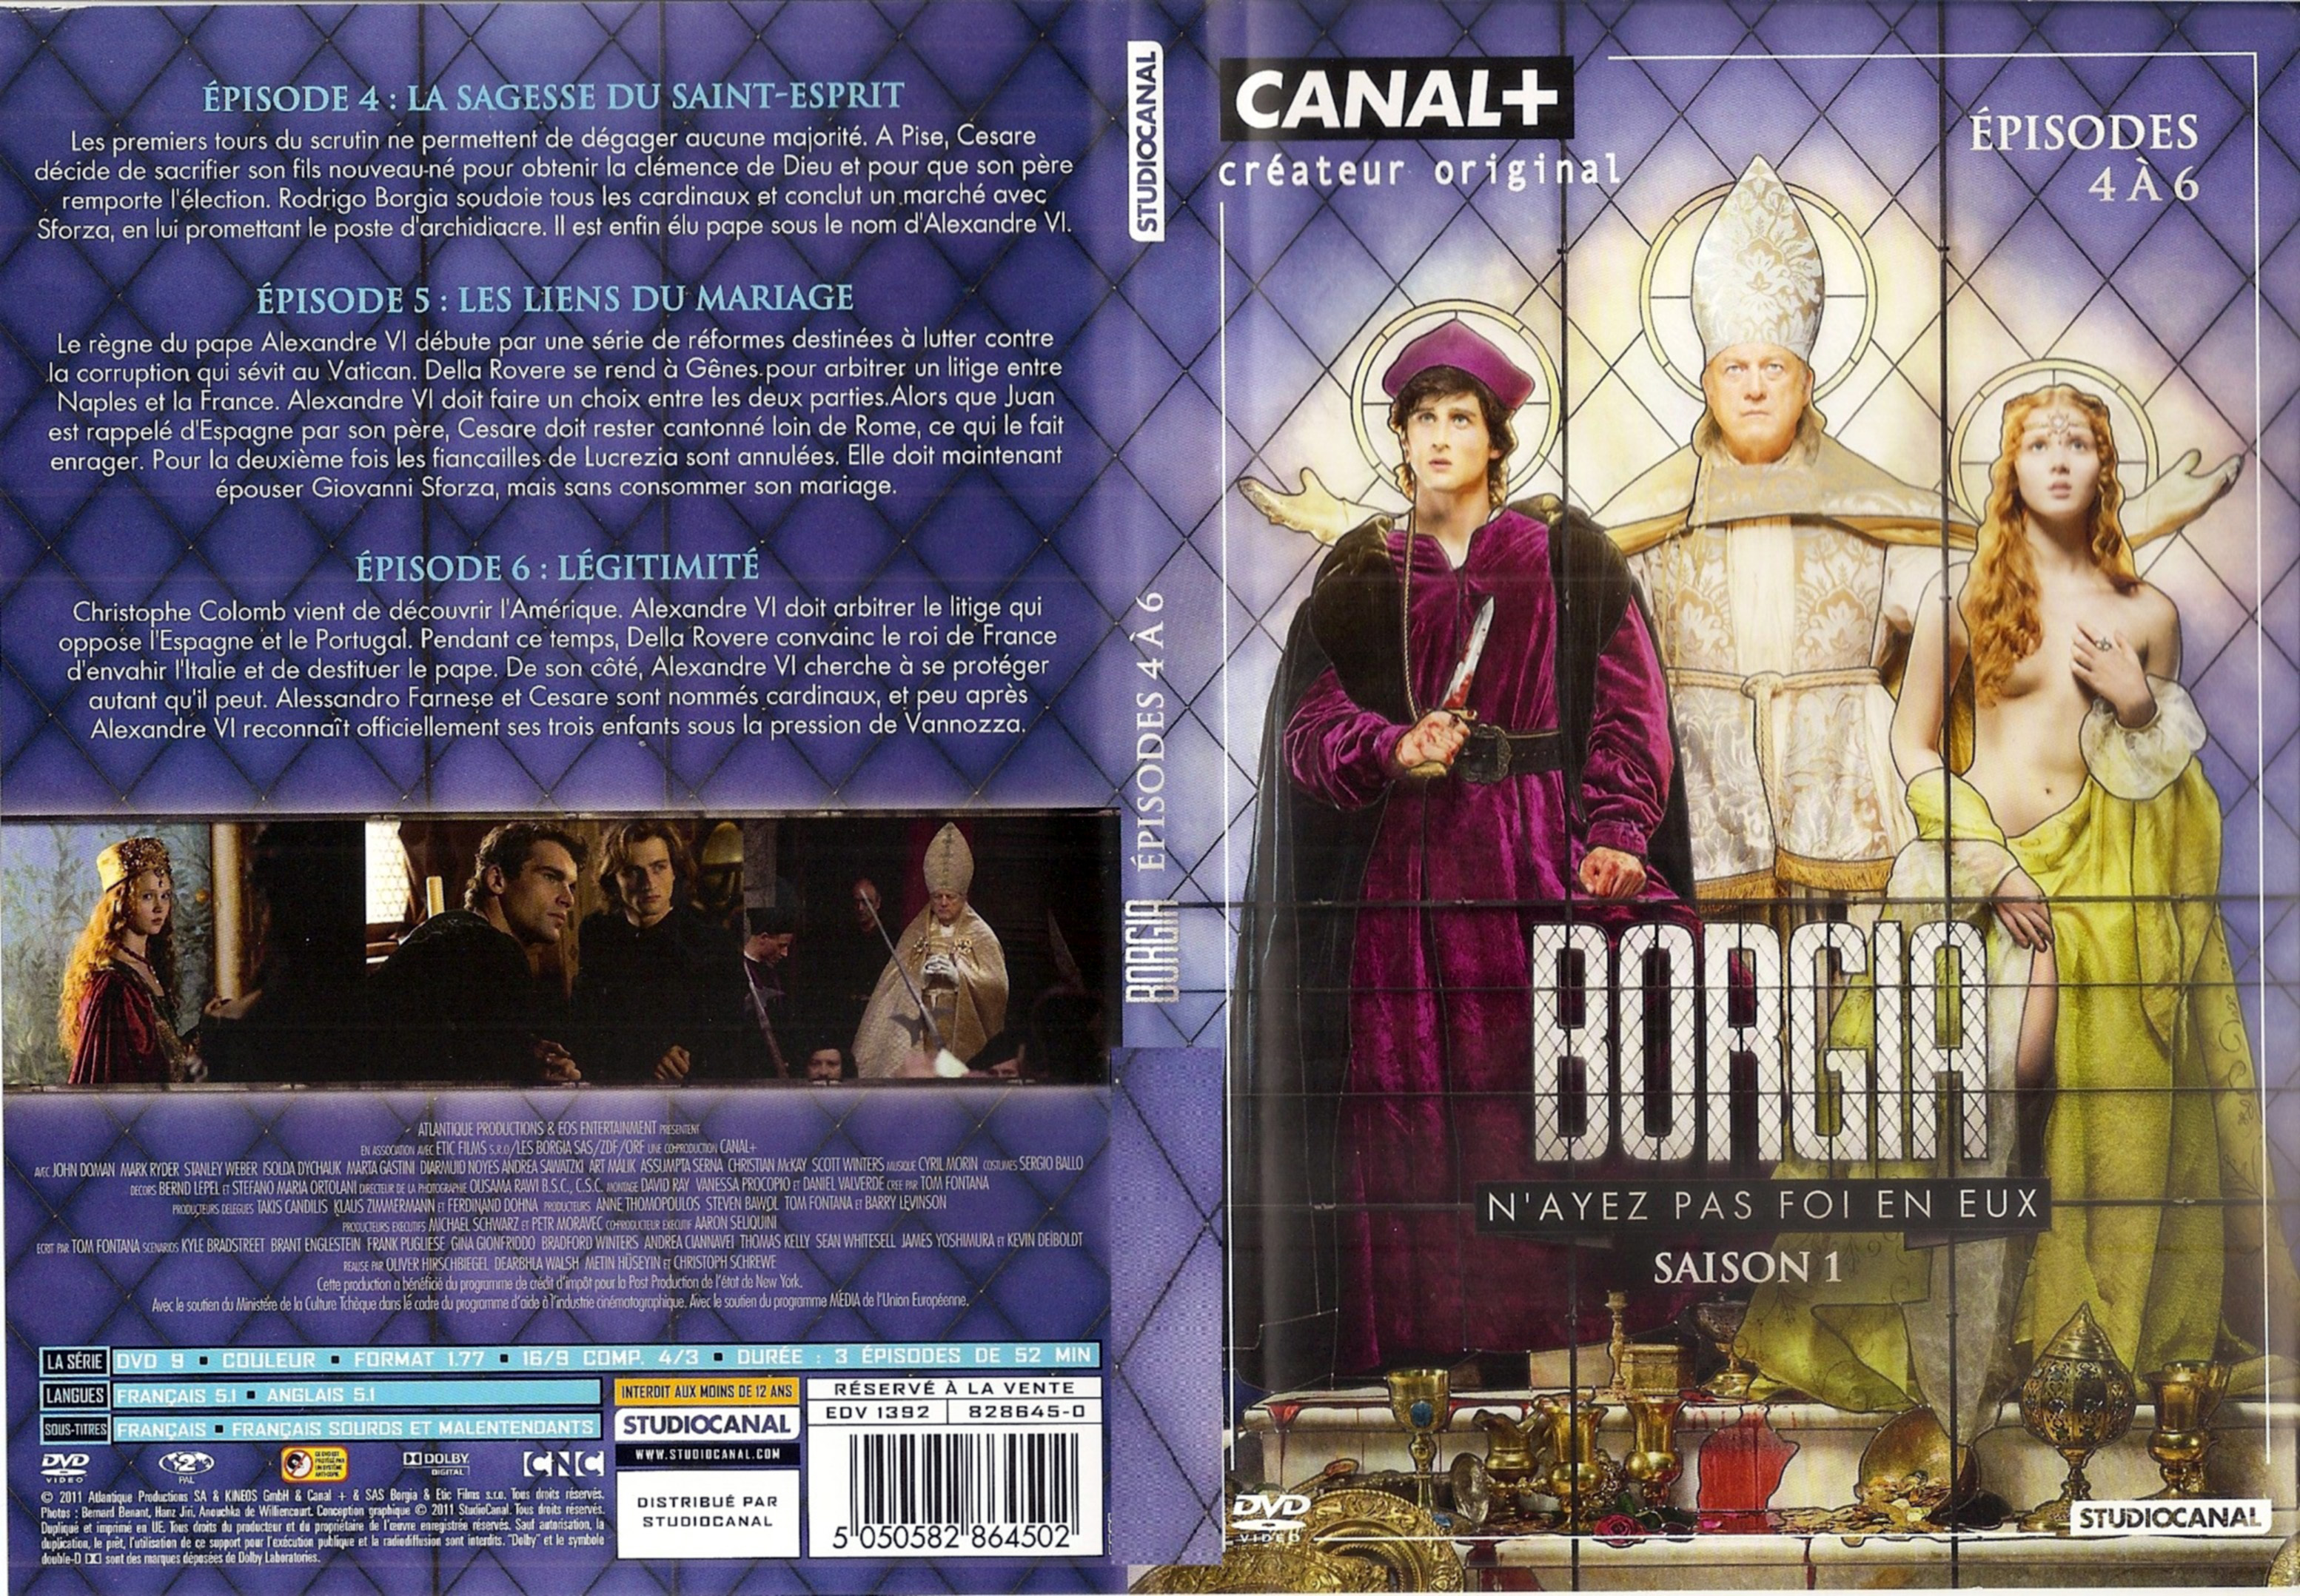 Jaquette DVD Borgia Saison 1 DVD 2